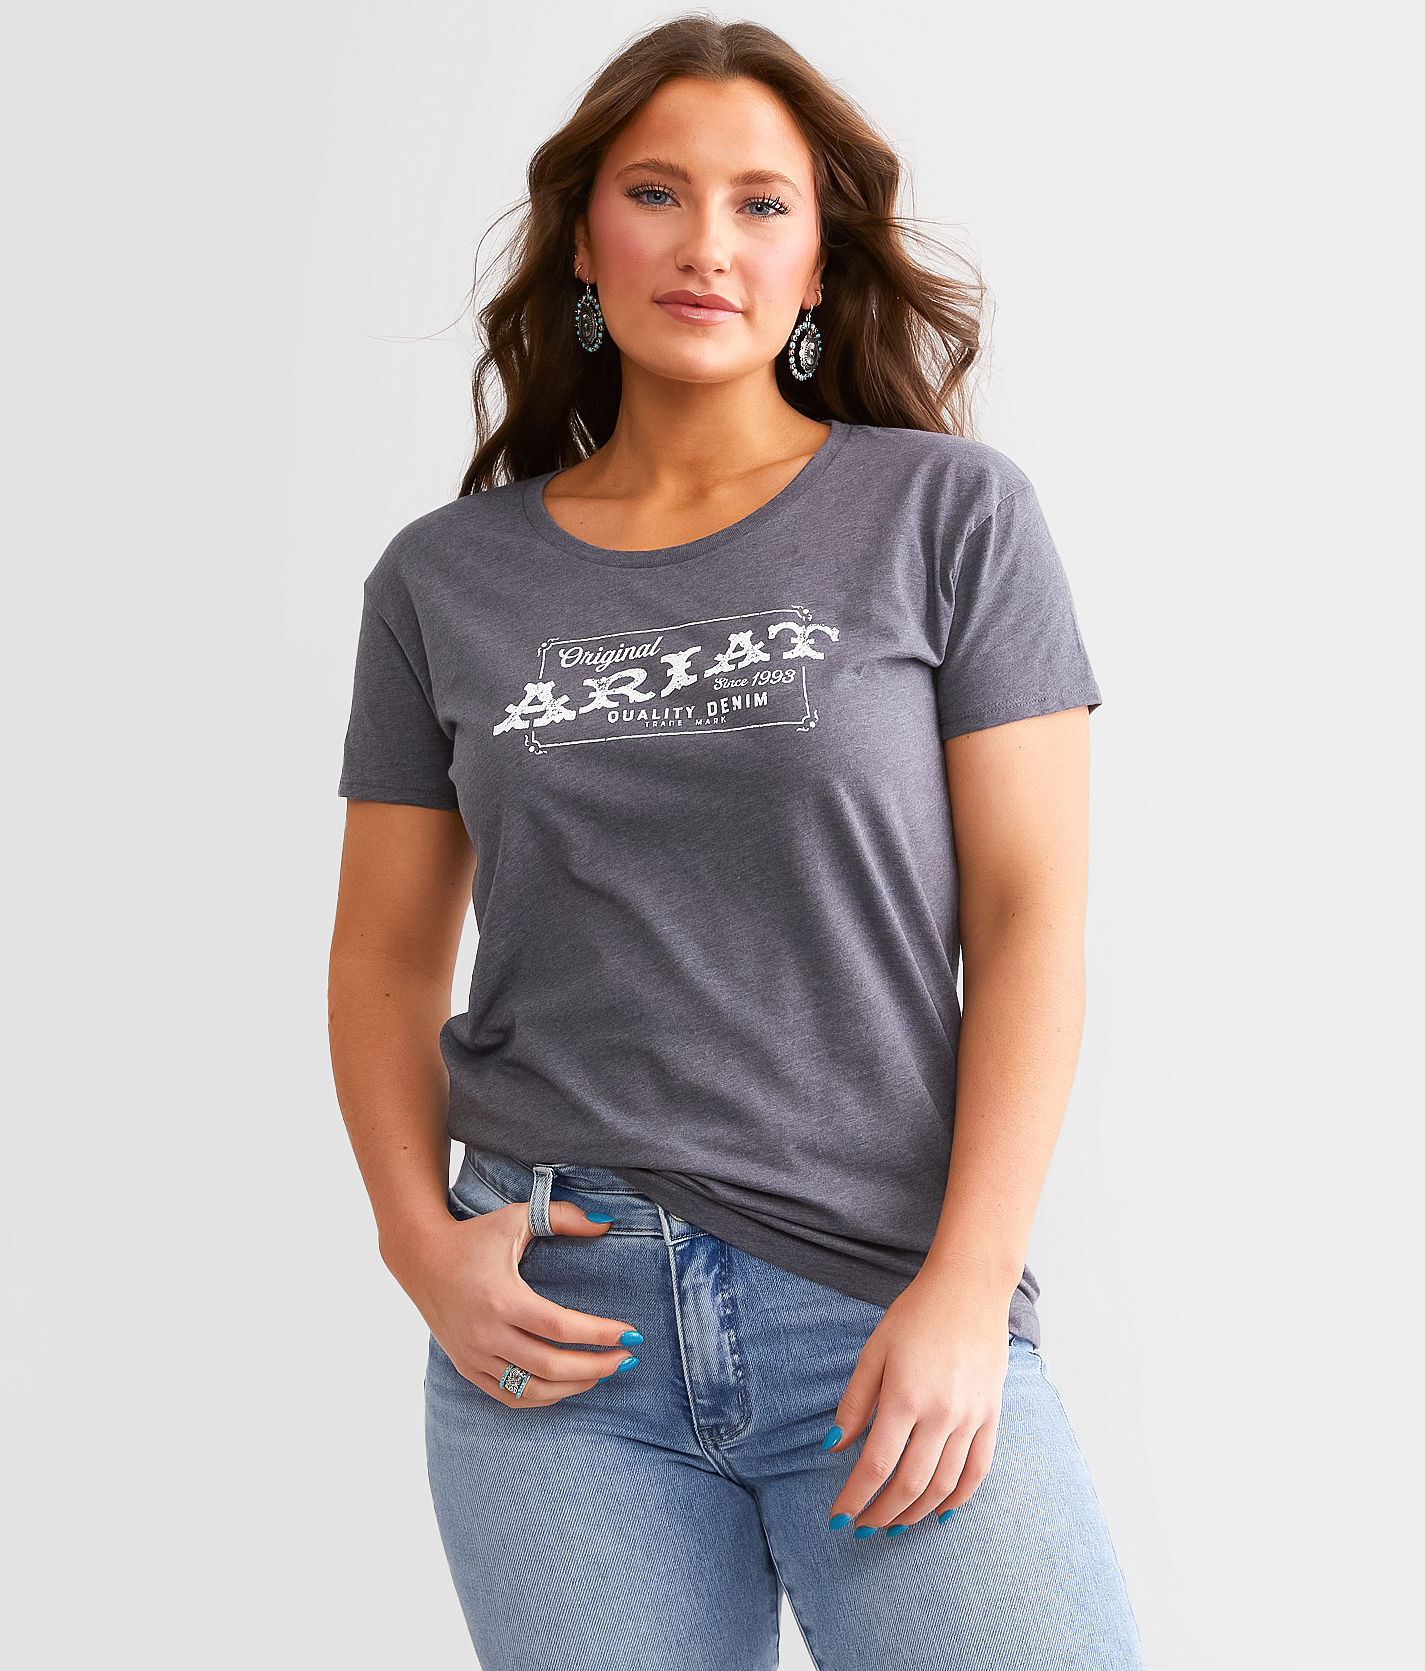 Ariat Denim Label T-Shirt  - Grey - female - Size: Extra Small